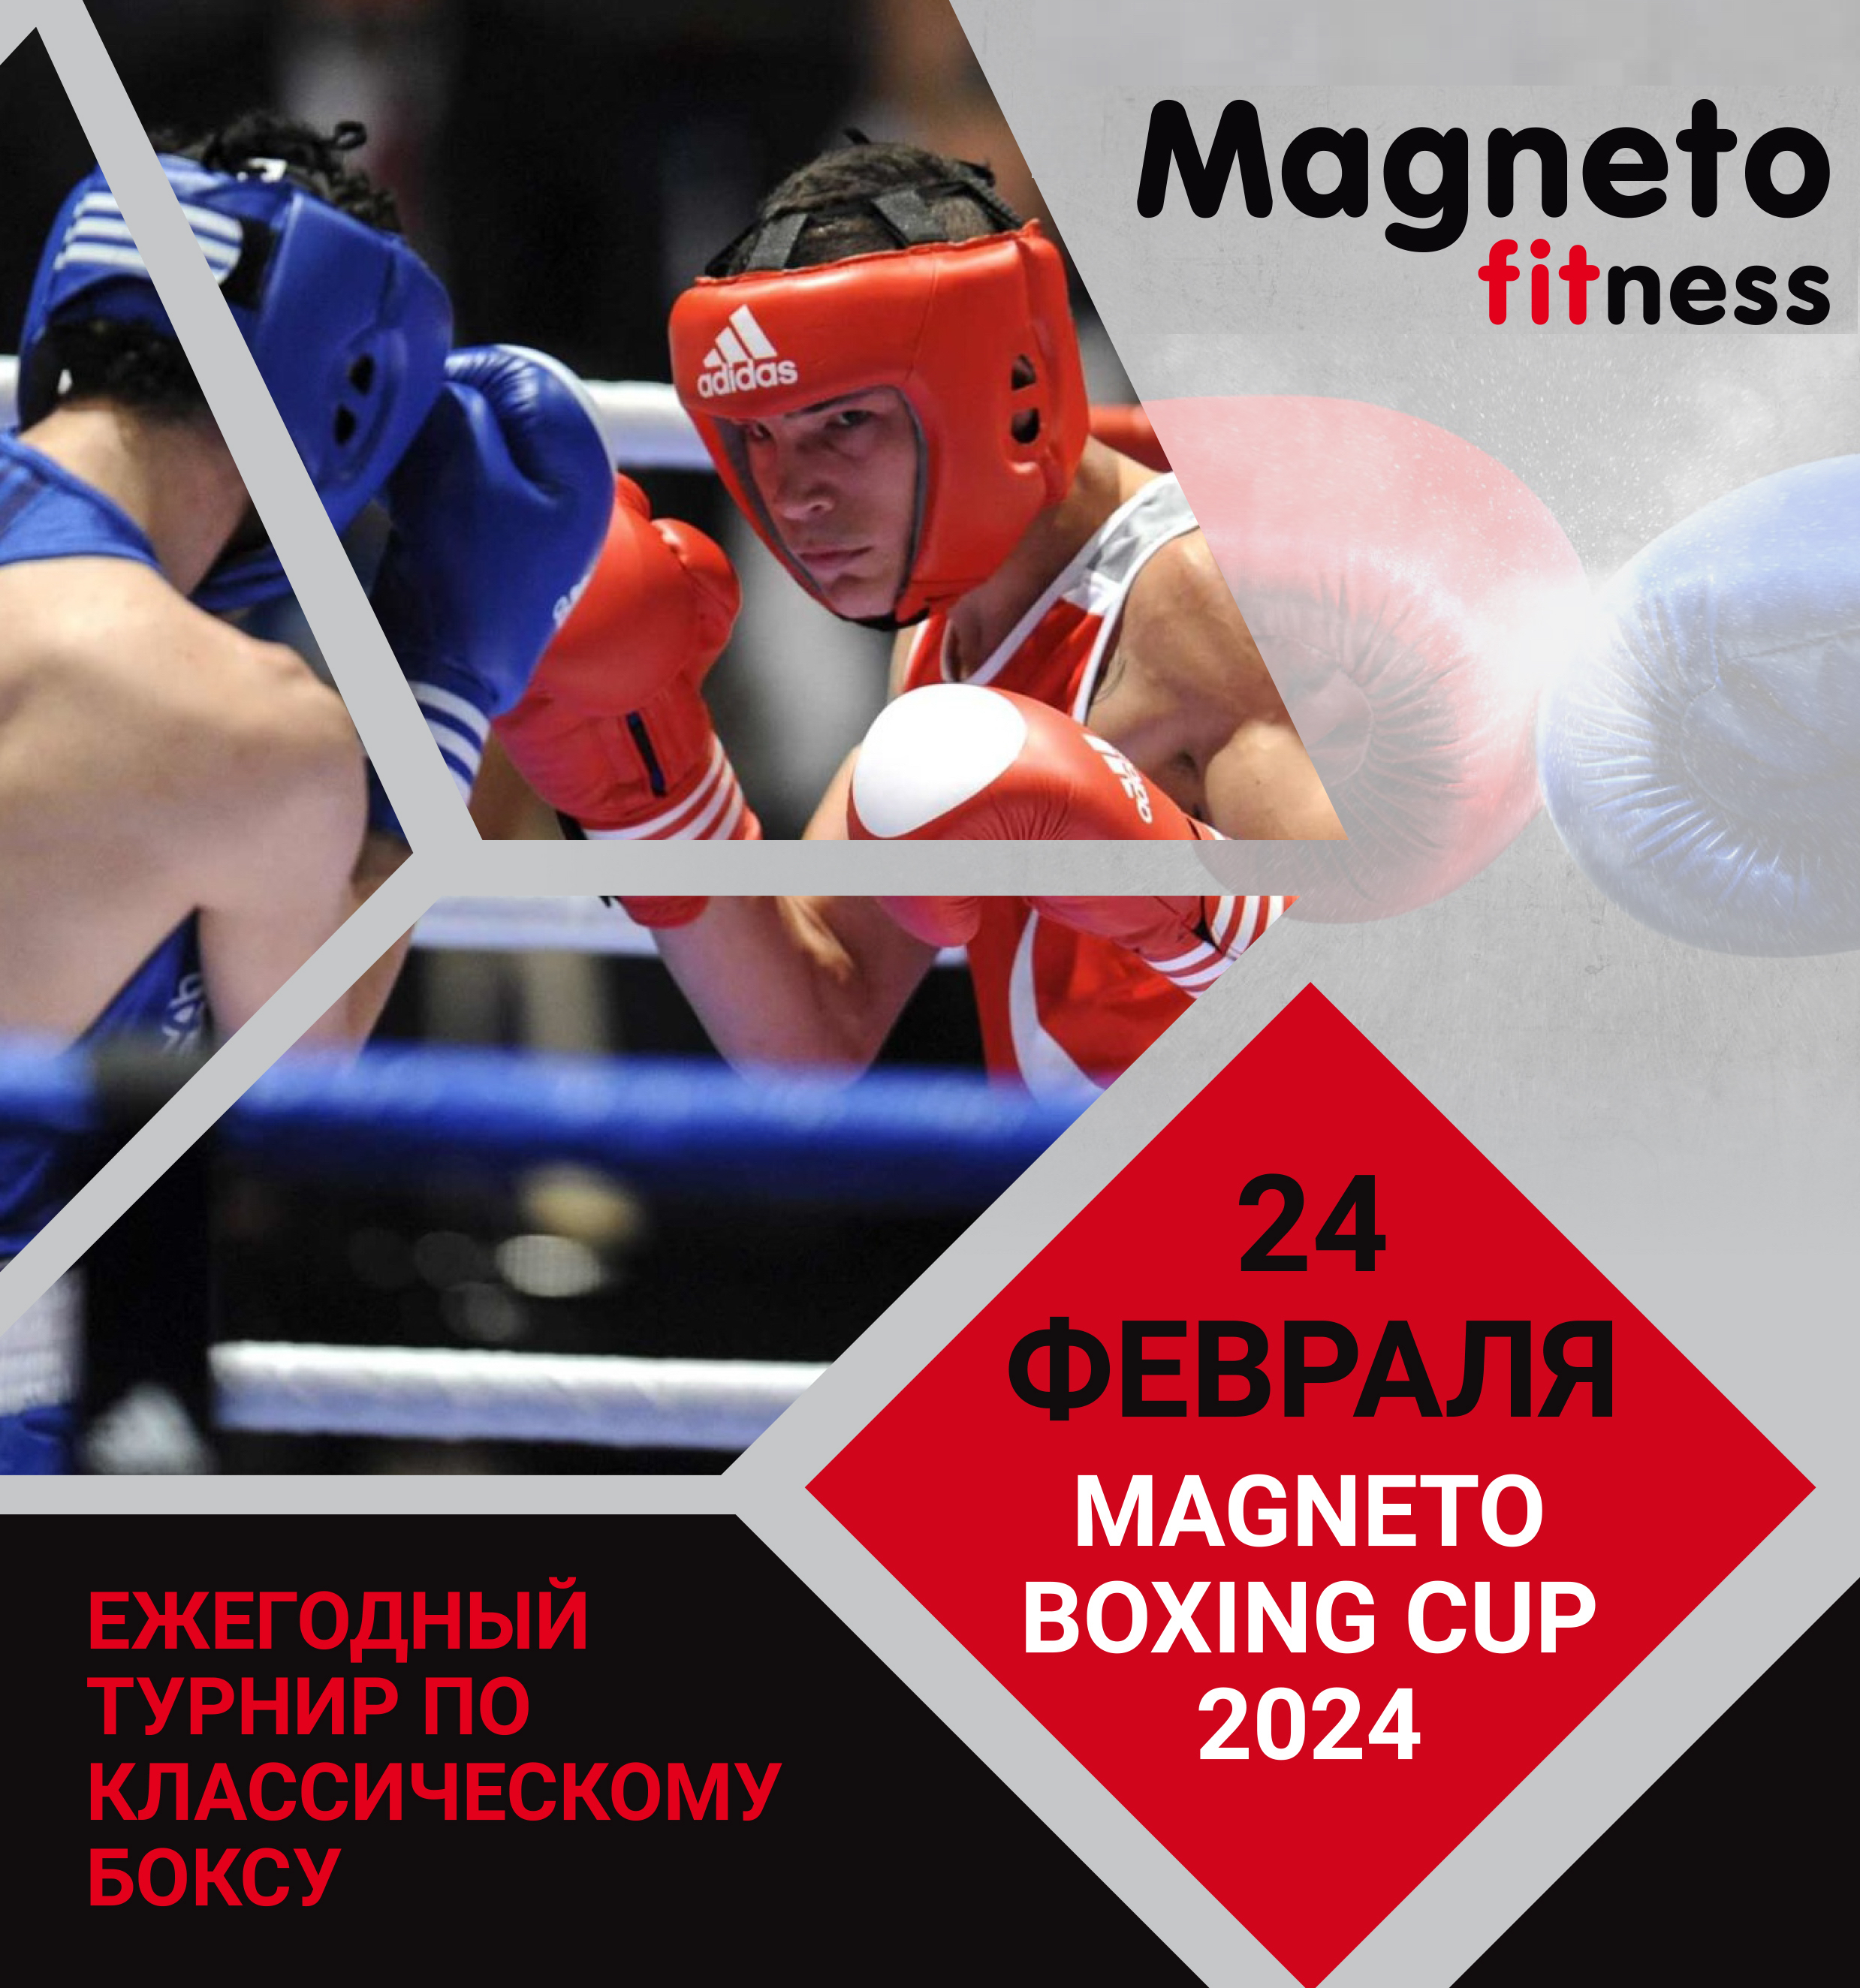 24 февраля Magneto boxing cup 2024 - Magneto Fitness Переделкино